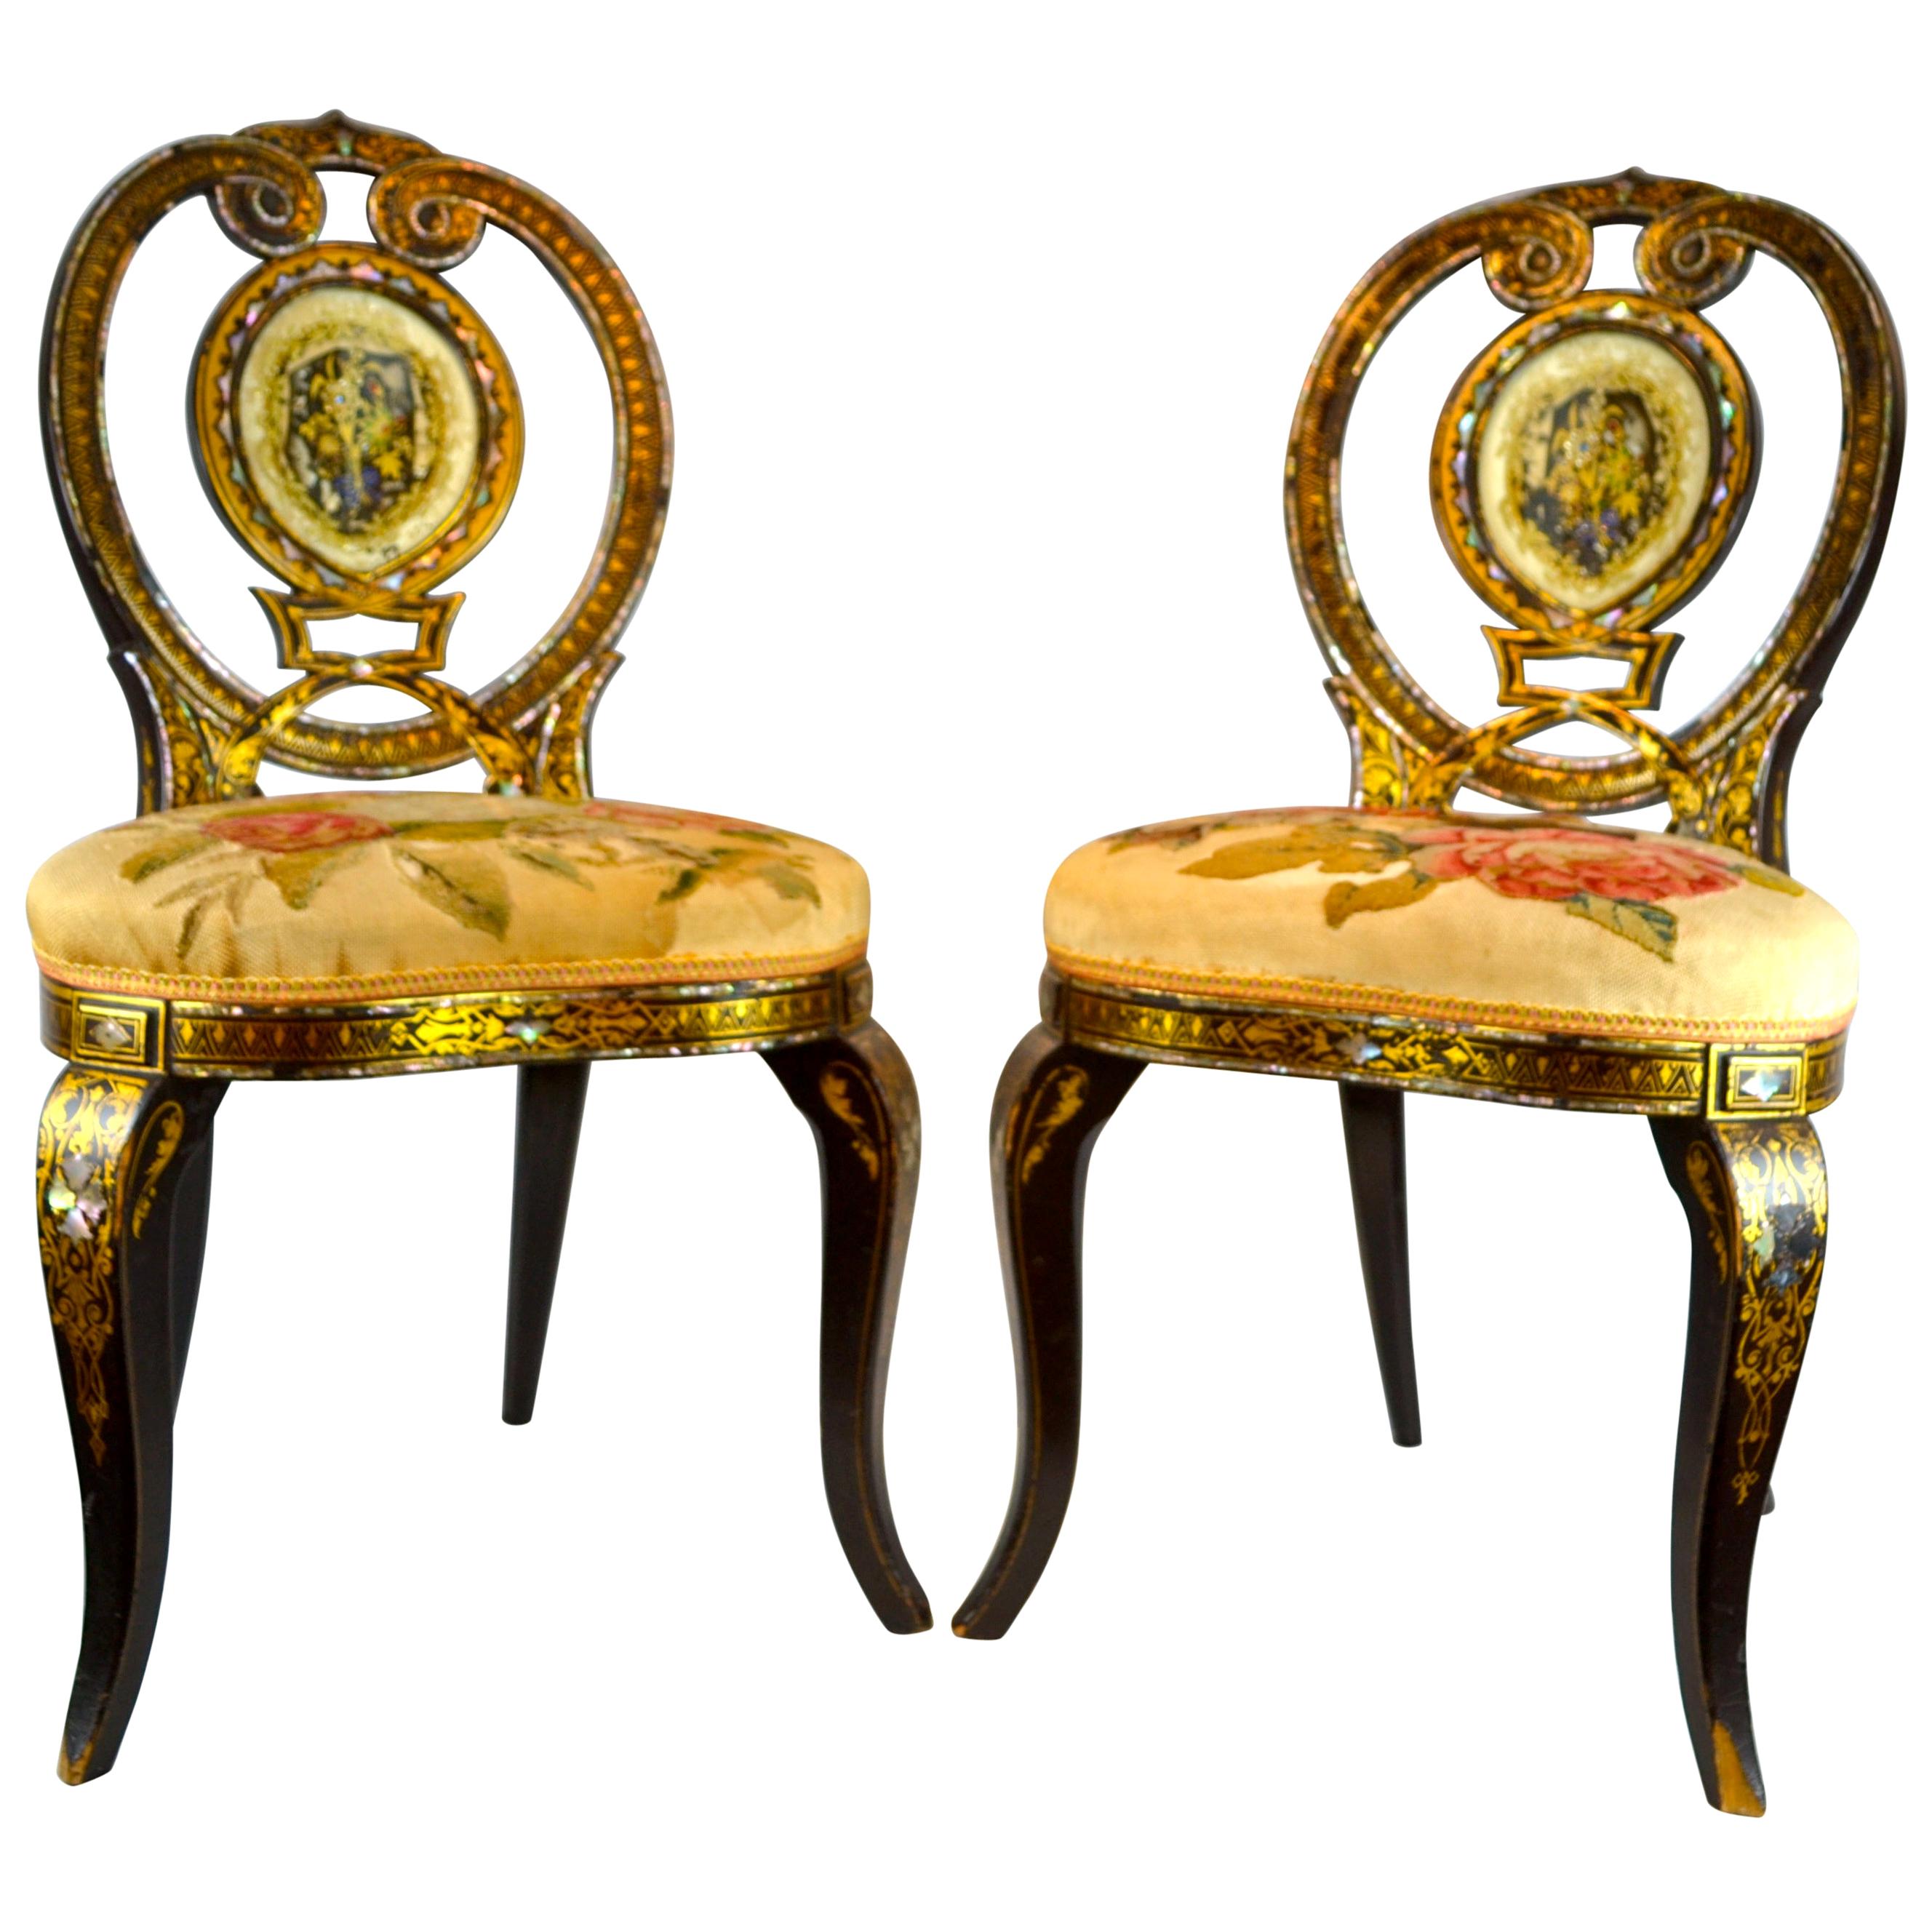 Pair of English 19th Century High Victorian Papier Mache Chairs